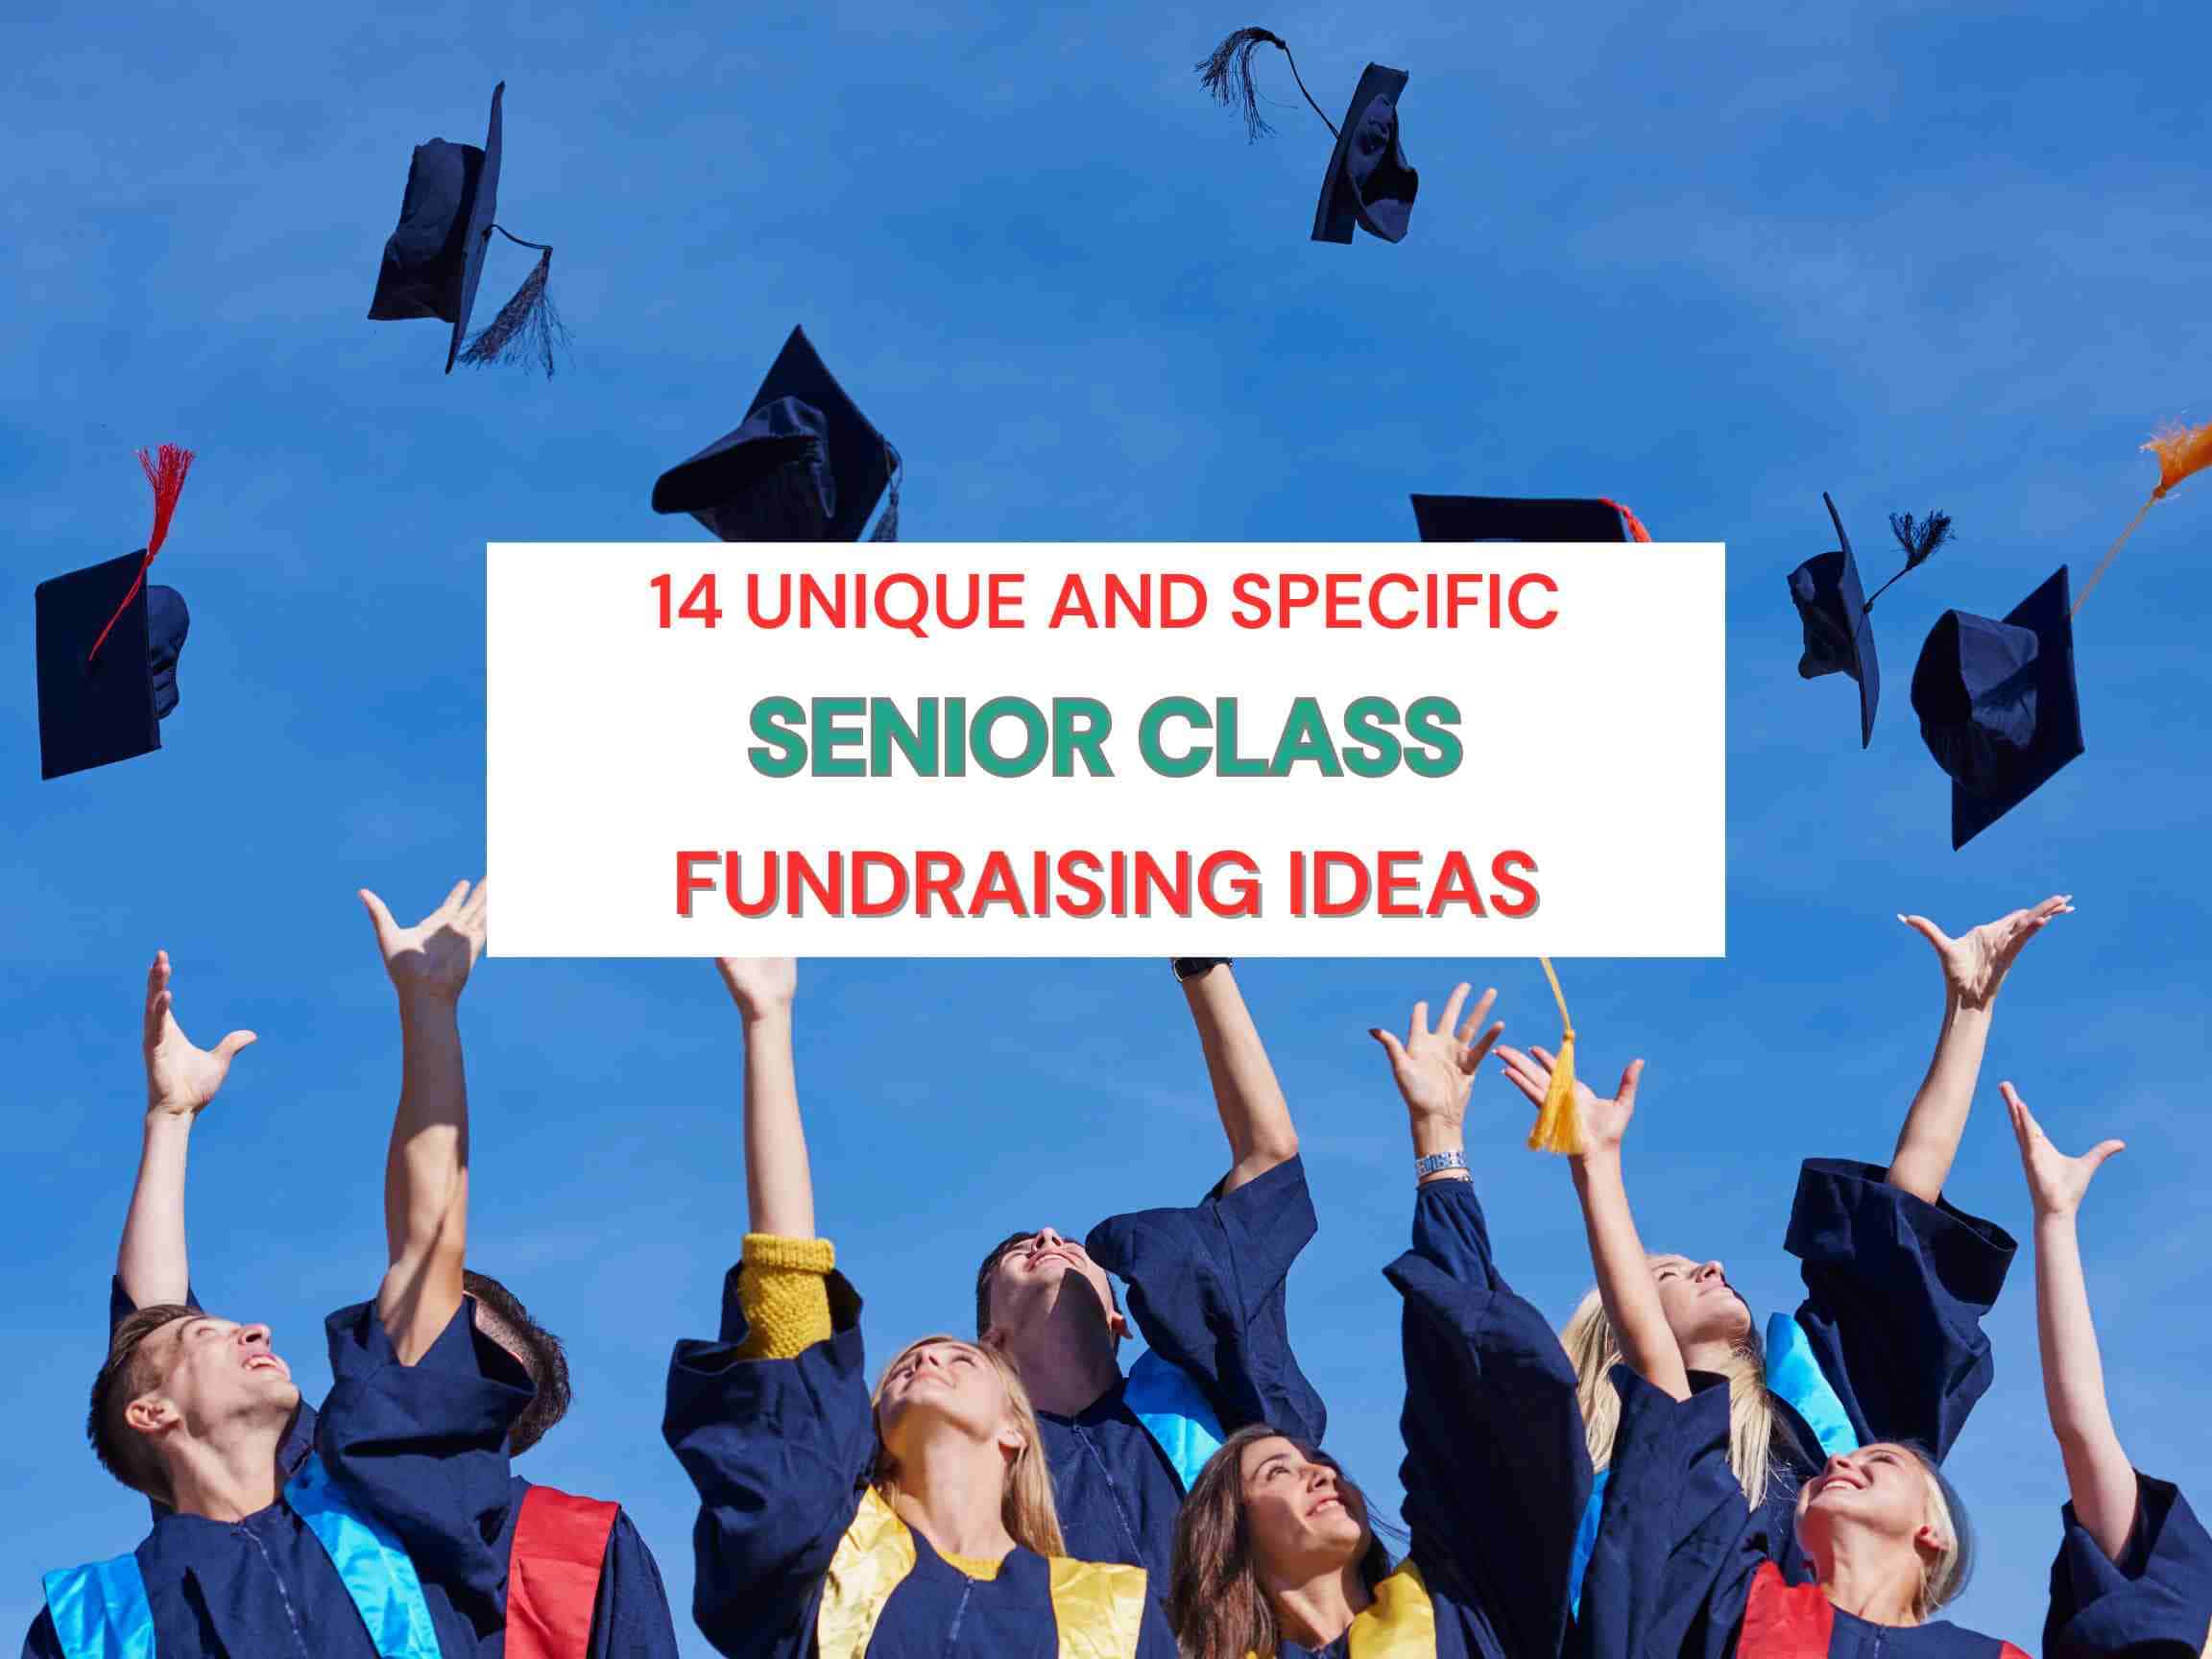 Fundraising ideas for senior class